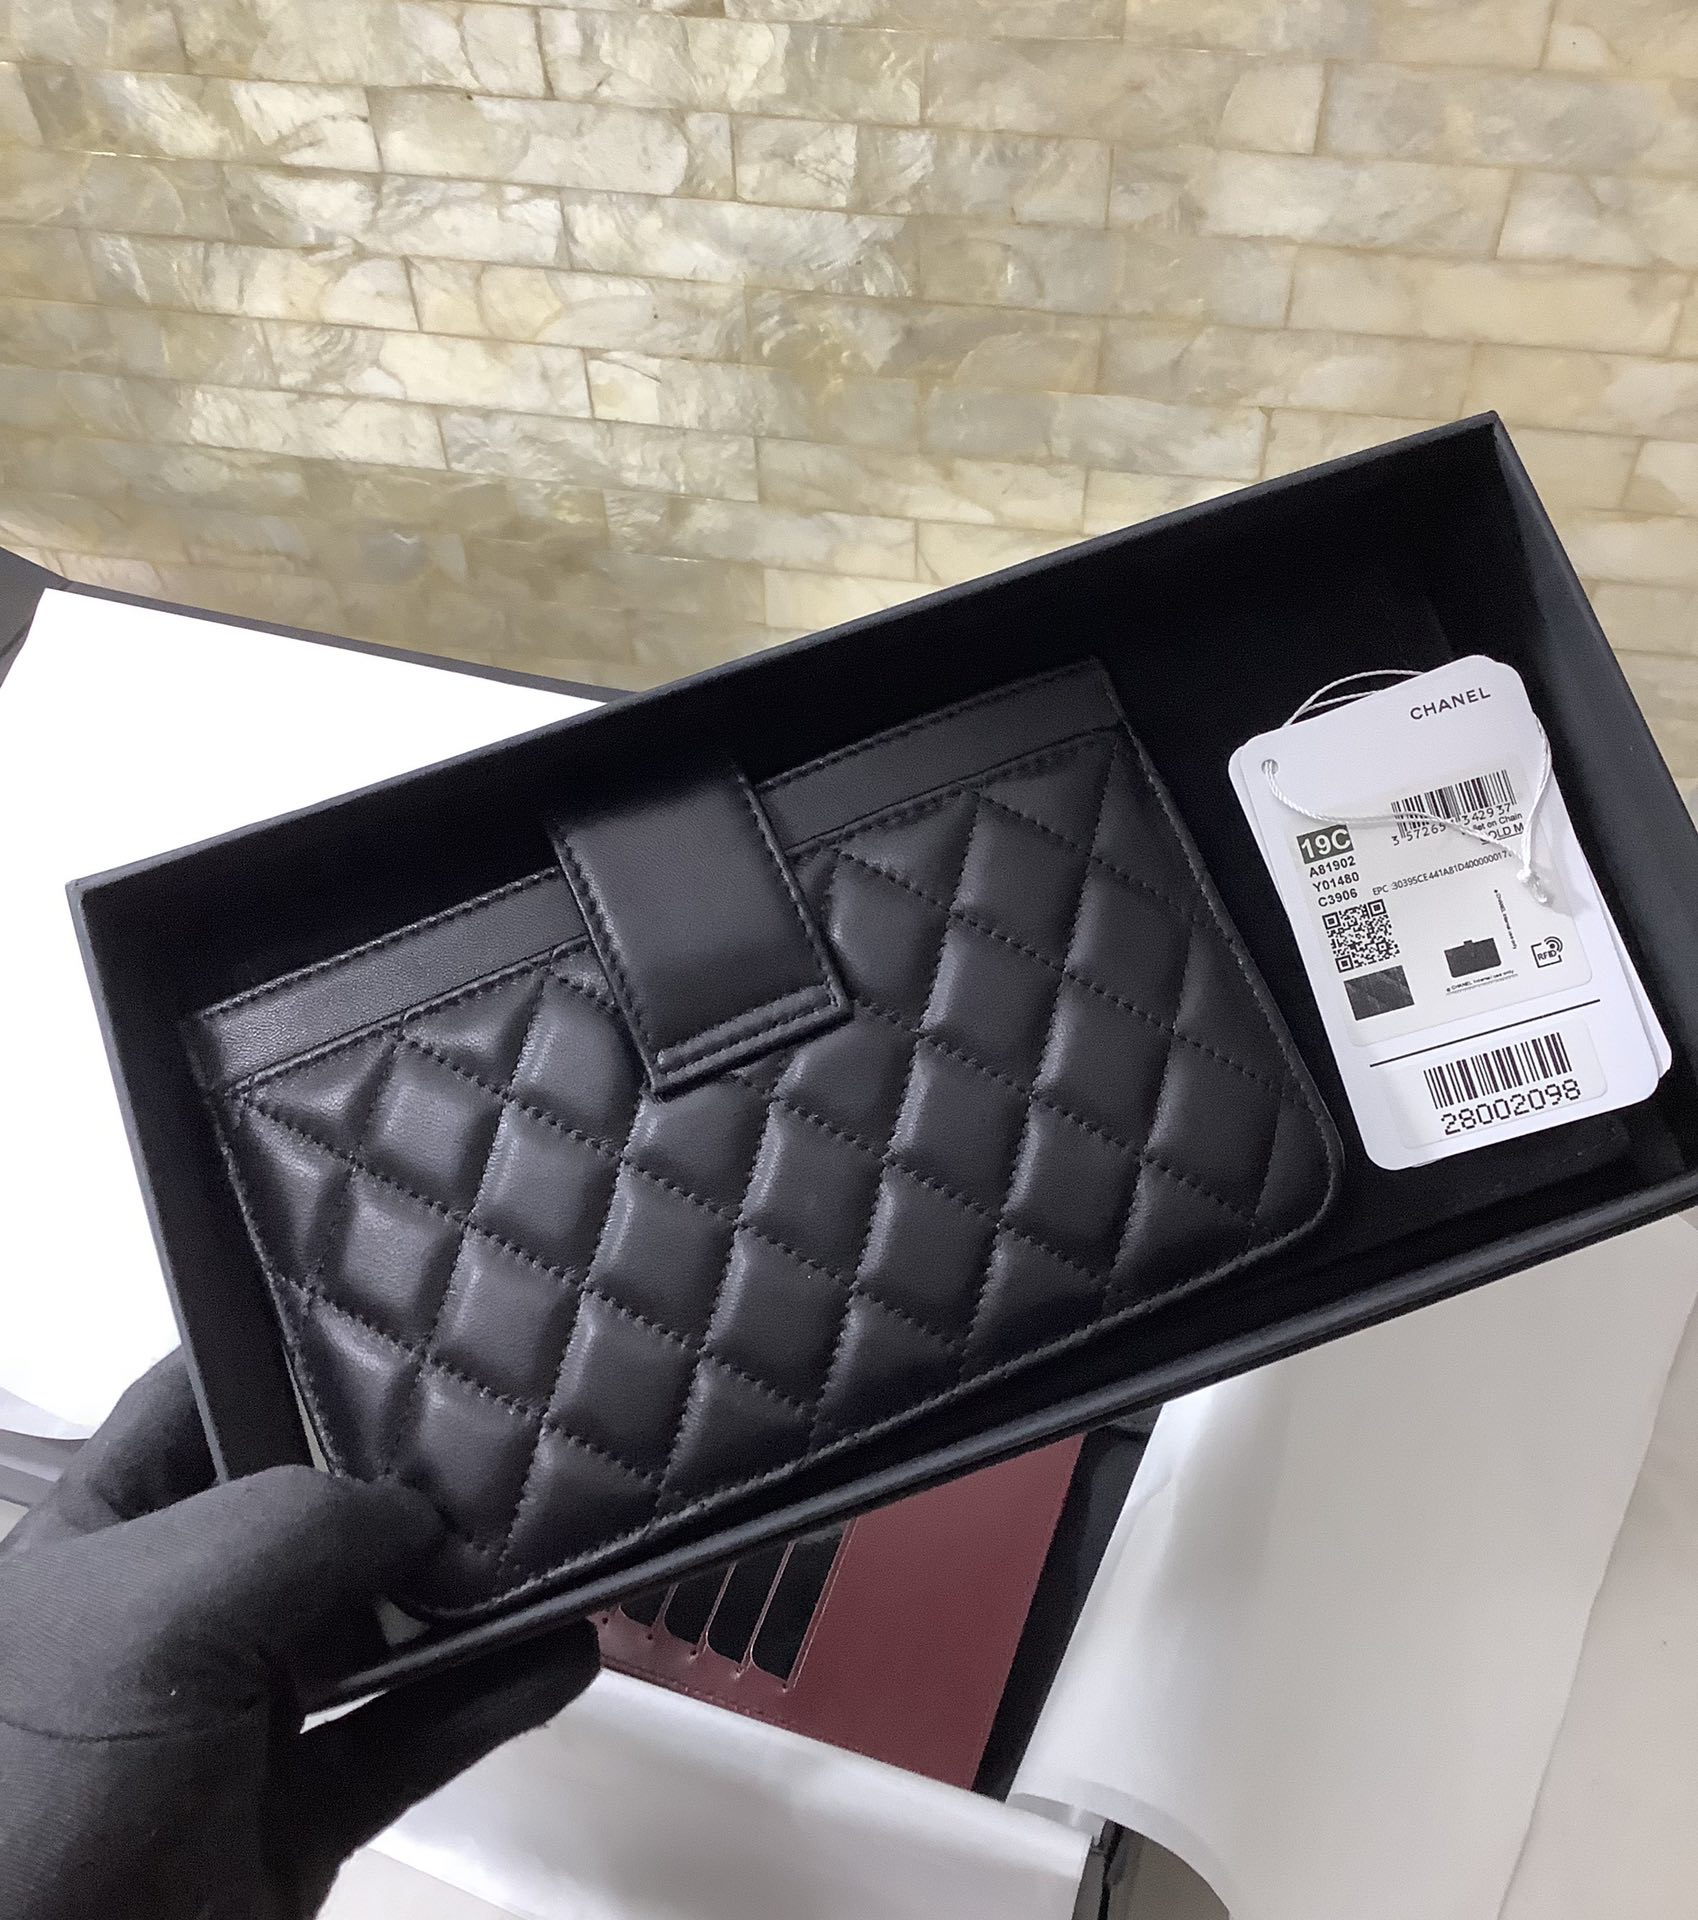 Chanel二件套卡包羊皮长款零钱包手机包卡包 A81902黑色/银扣